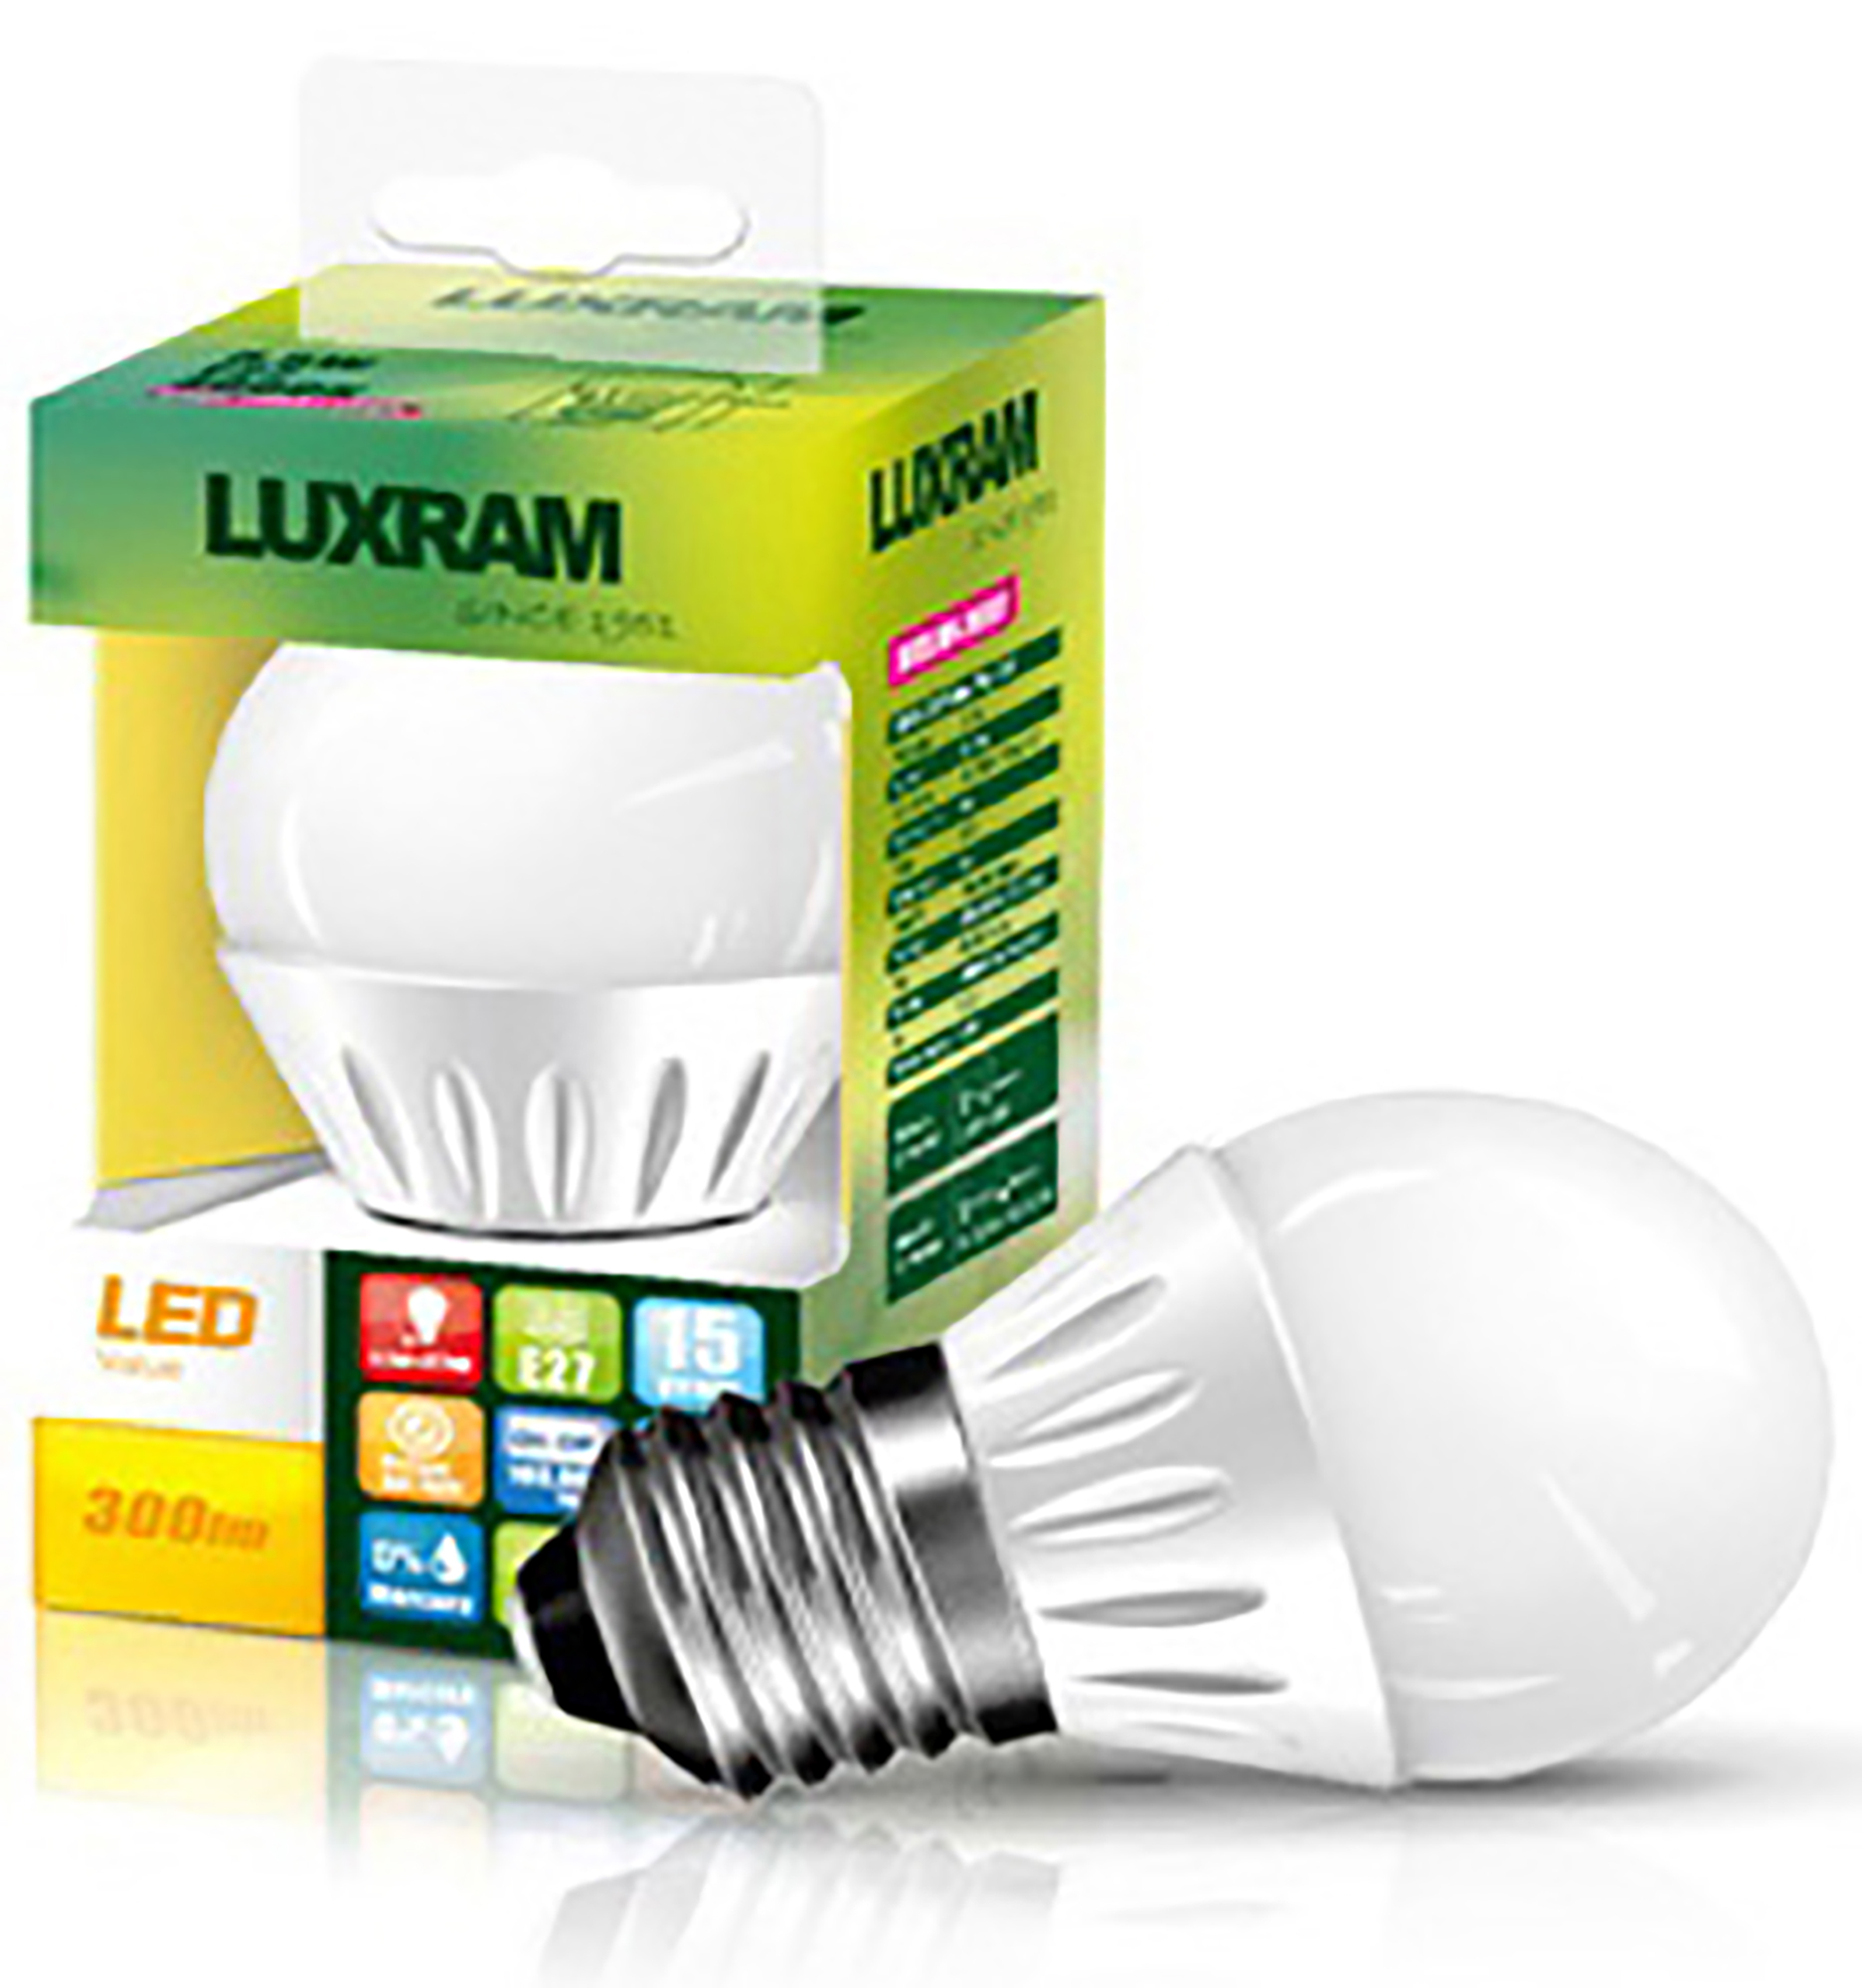 Value LED LED Lamps Luxram Golf Ball